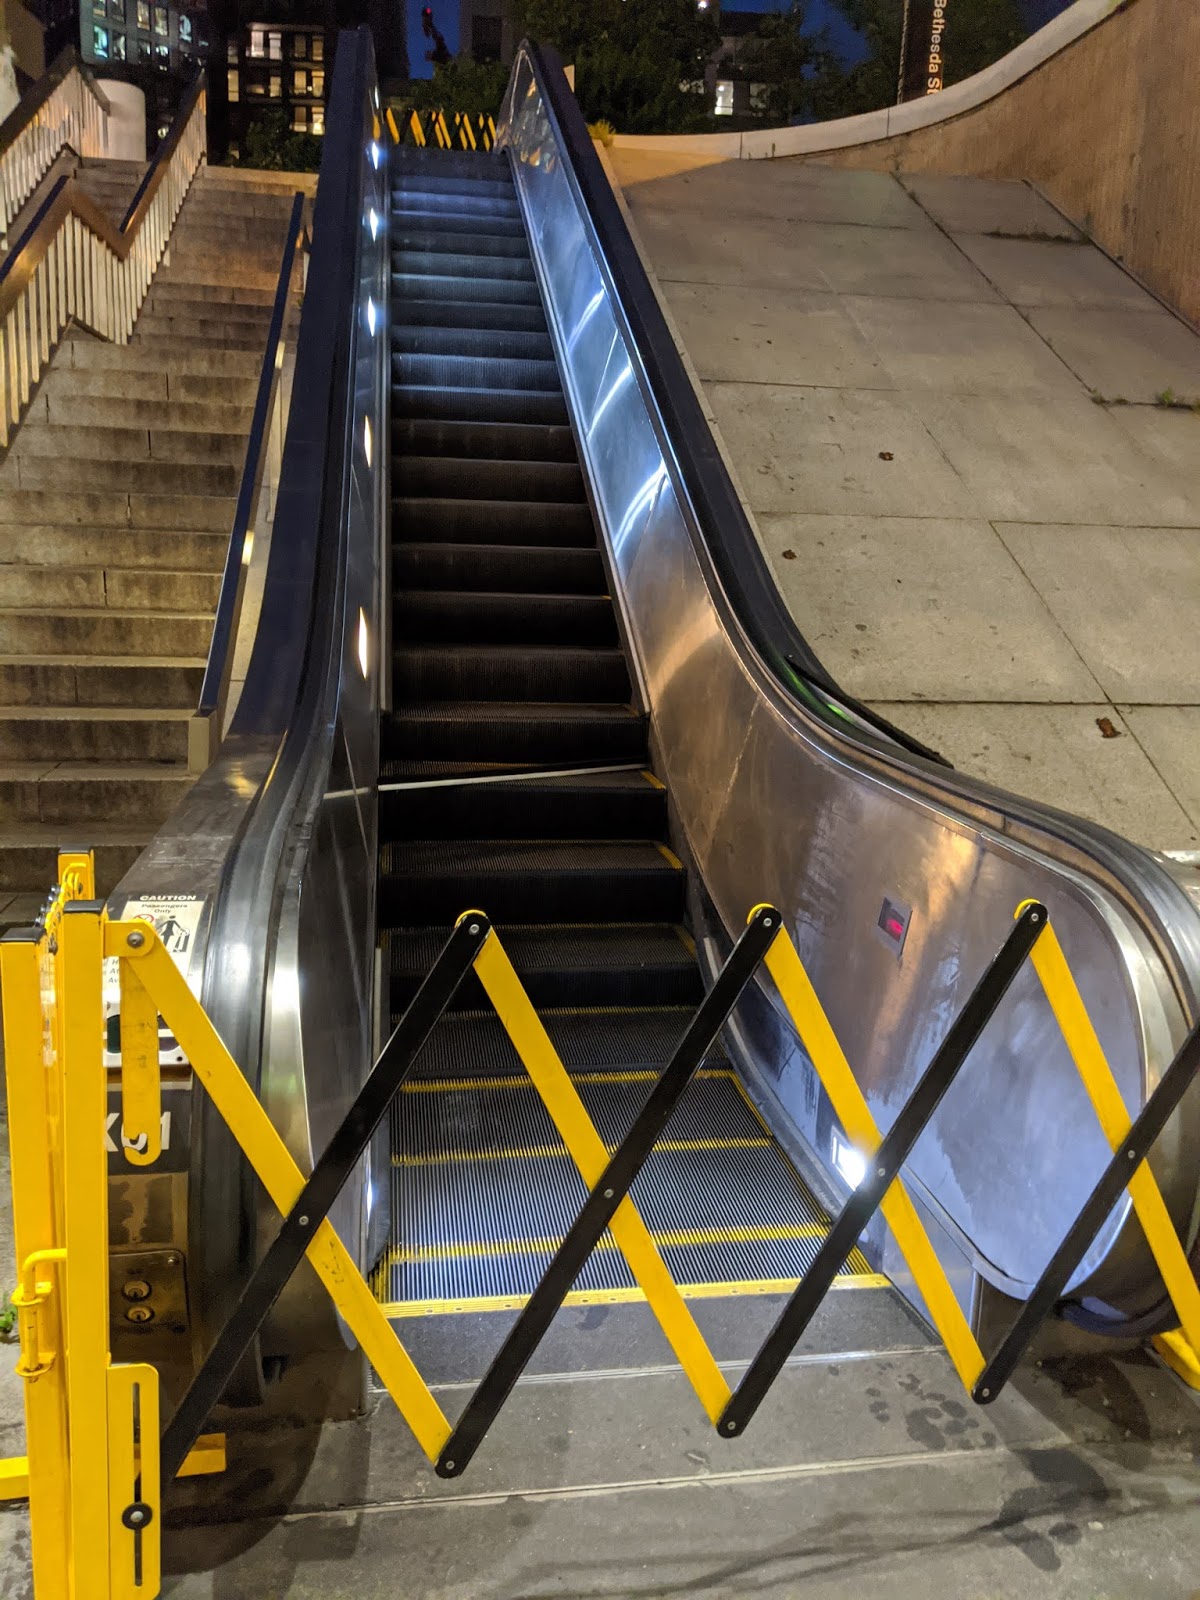 broken escalator